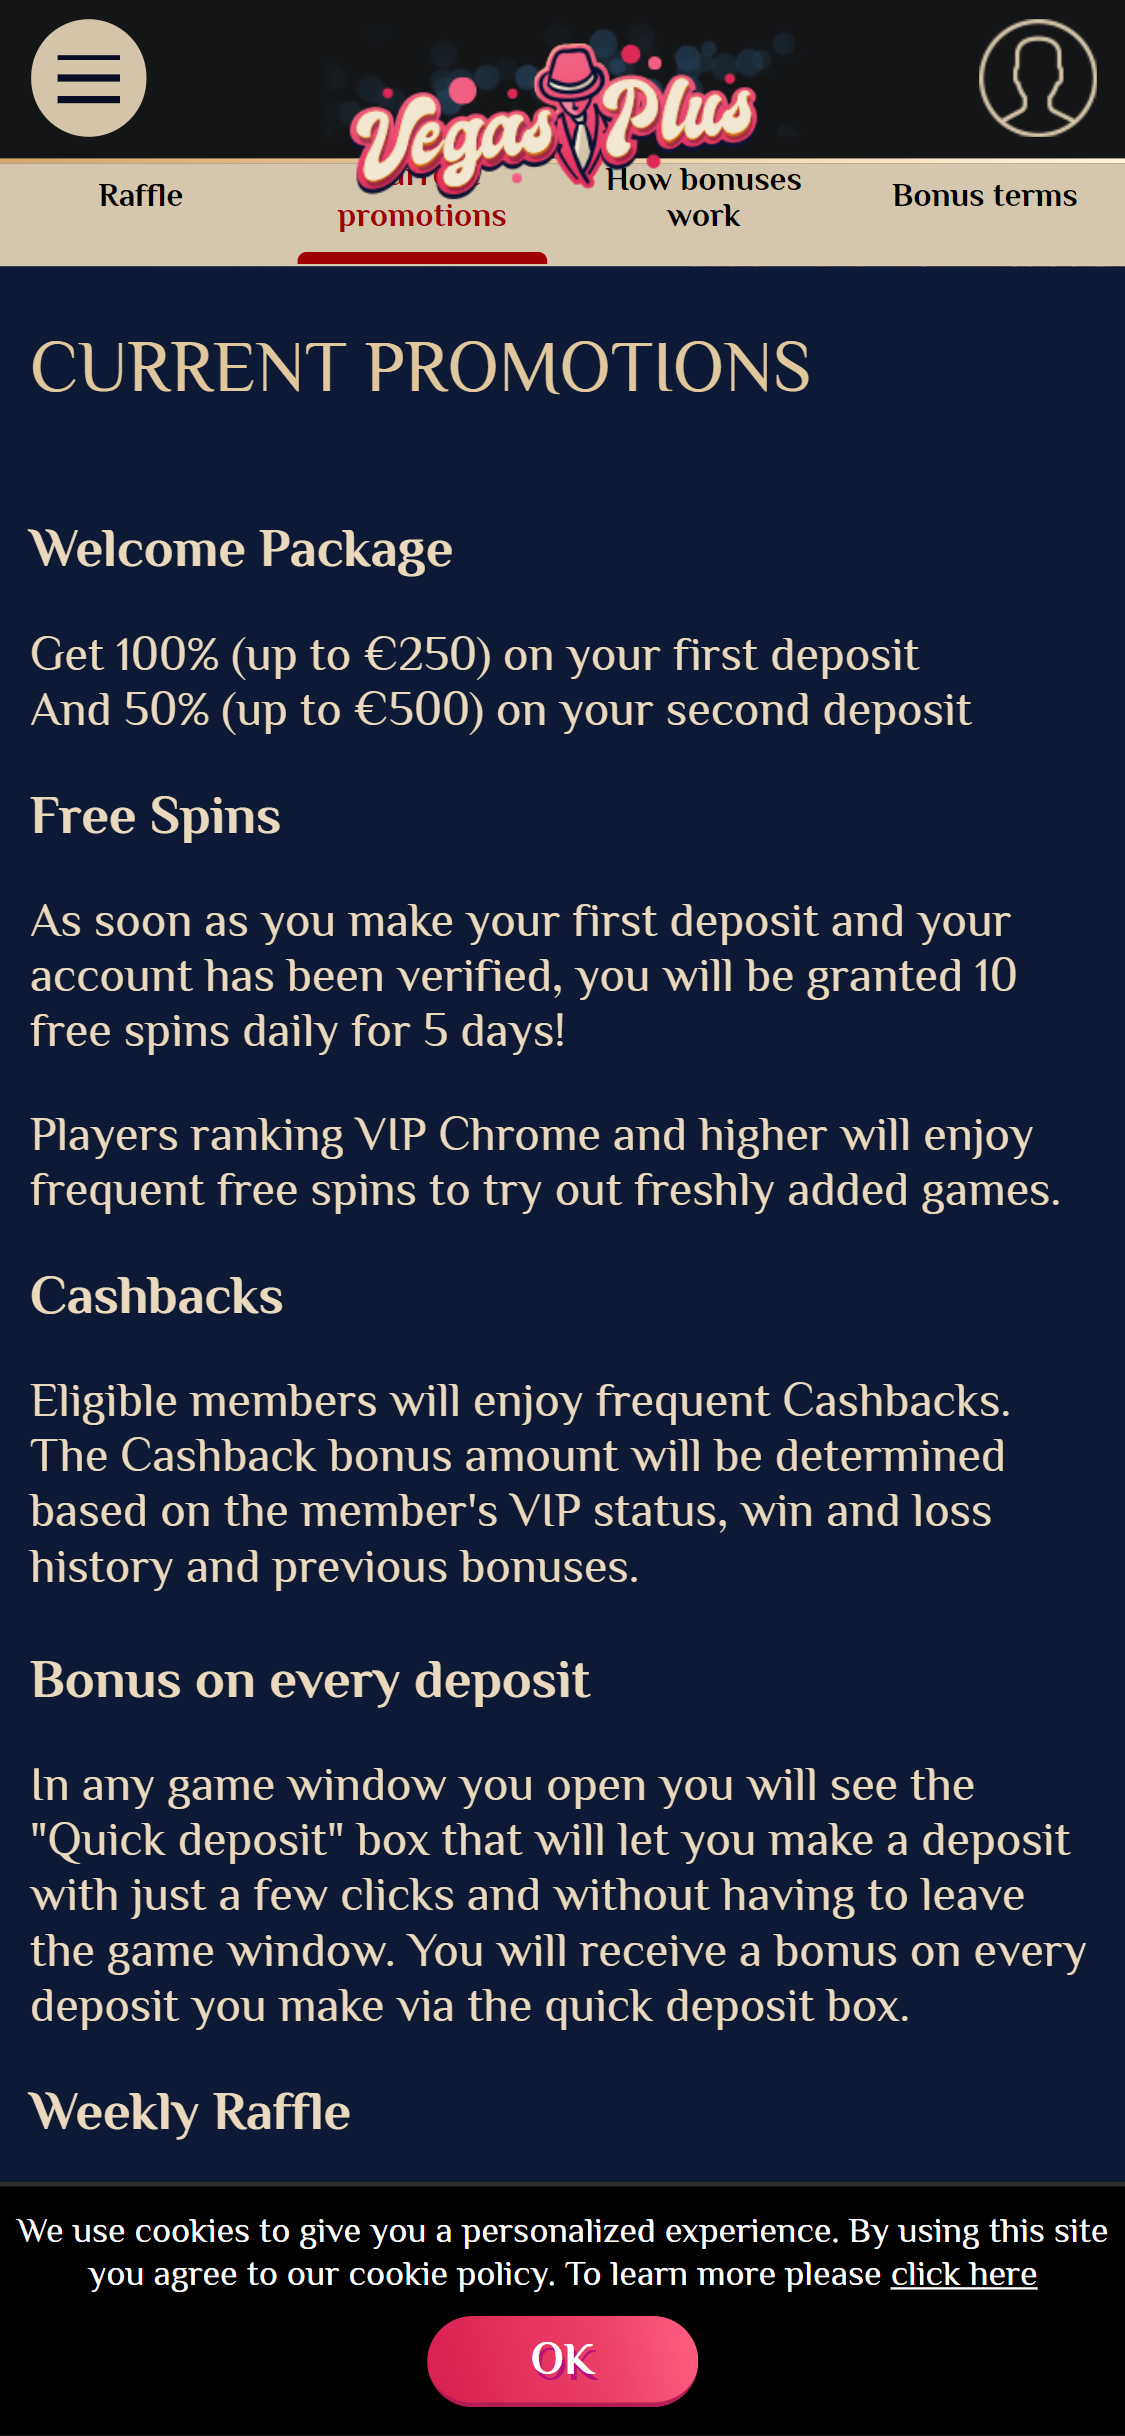 VegasPlus Casino Mobile No Deposit Bonus Review